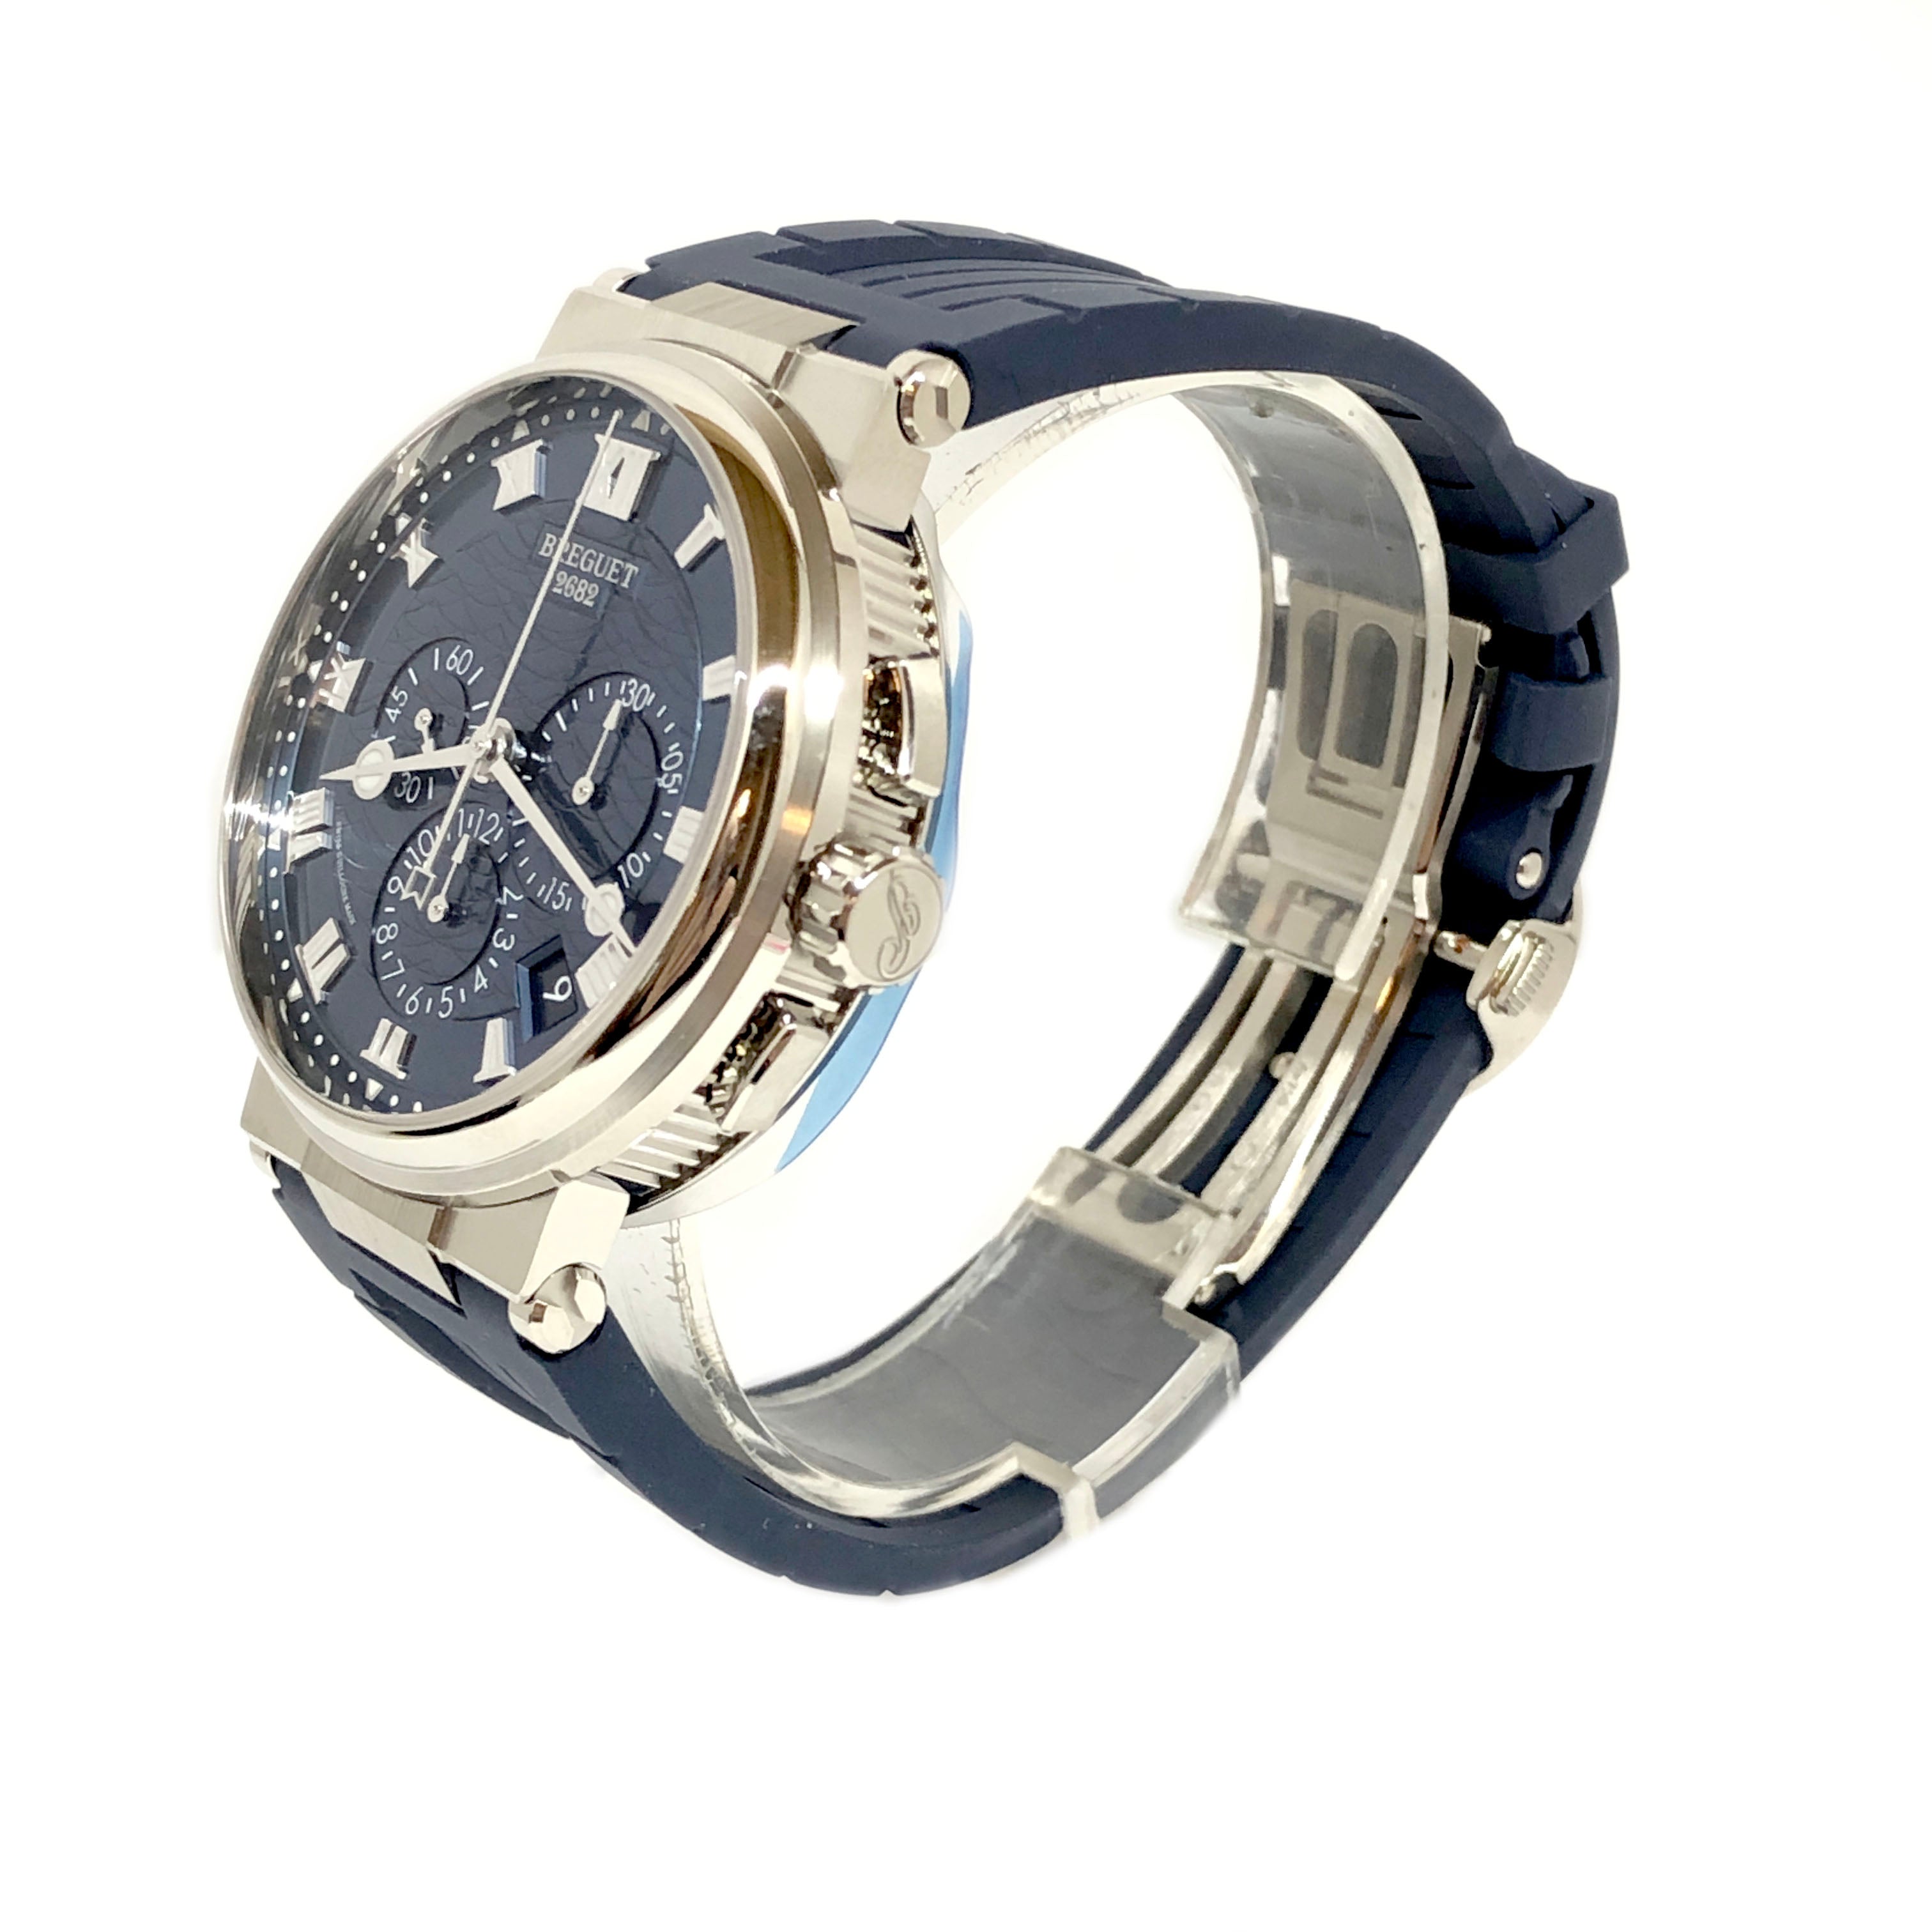 Breguet Marine 5527 Chronograph 18K White Gold Men's Watch